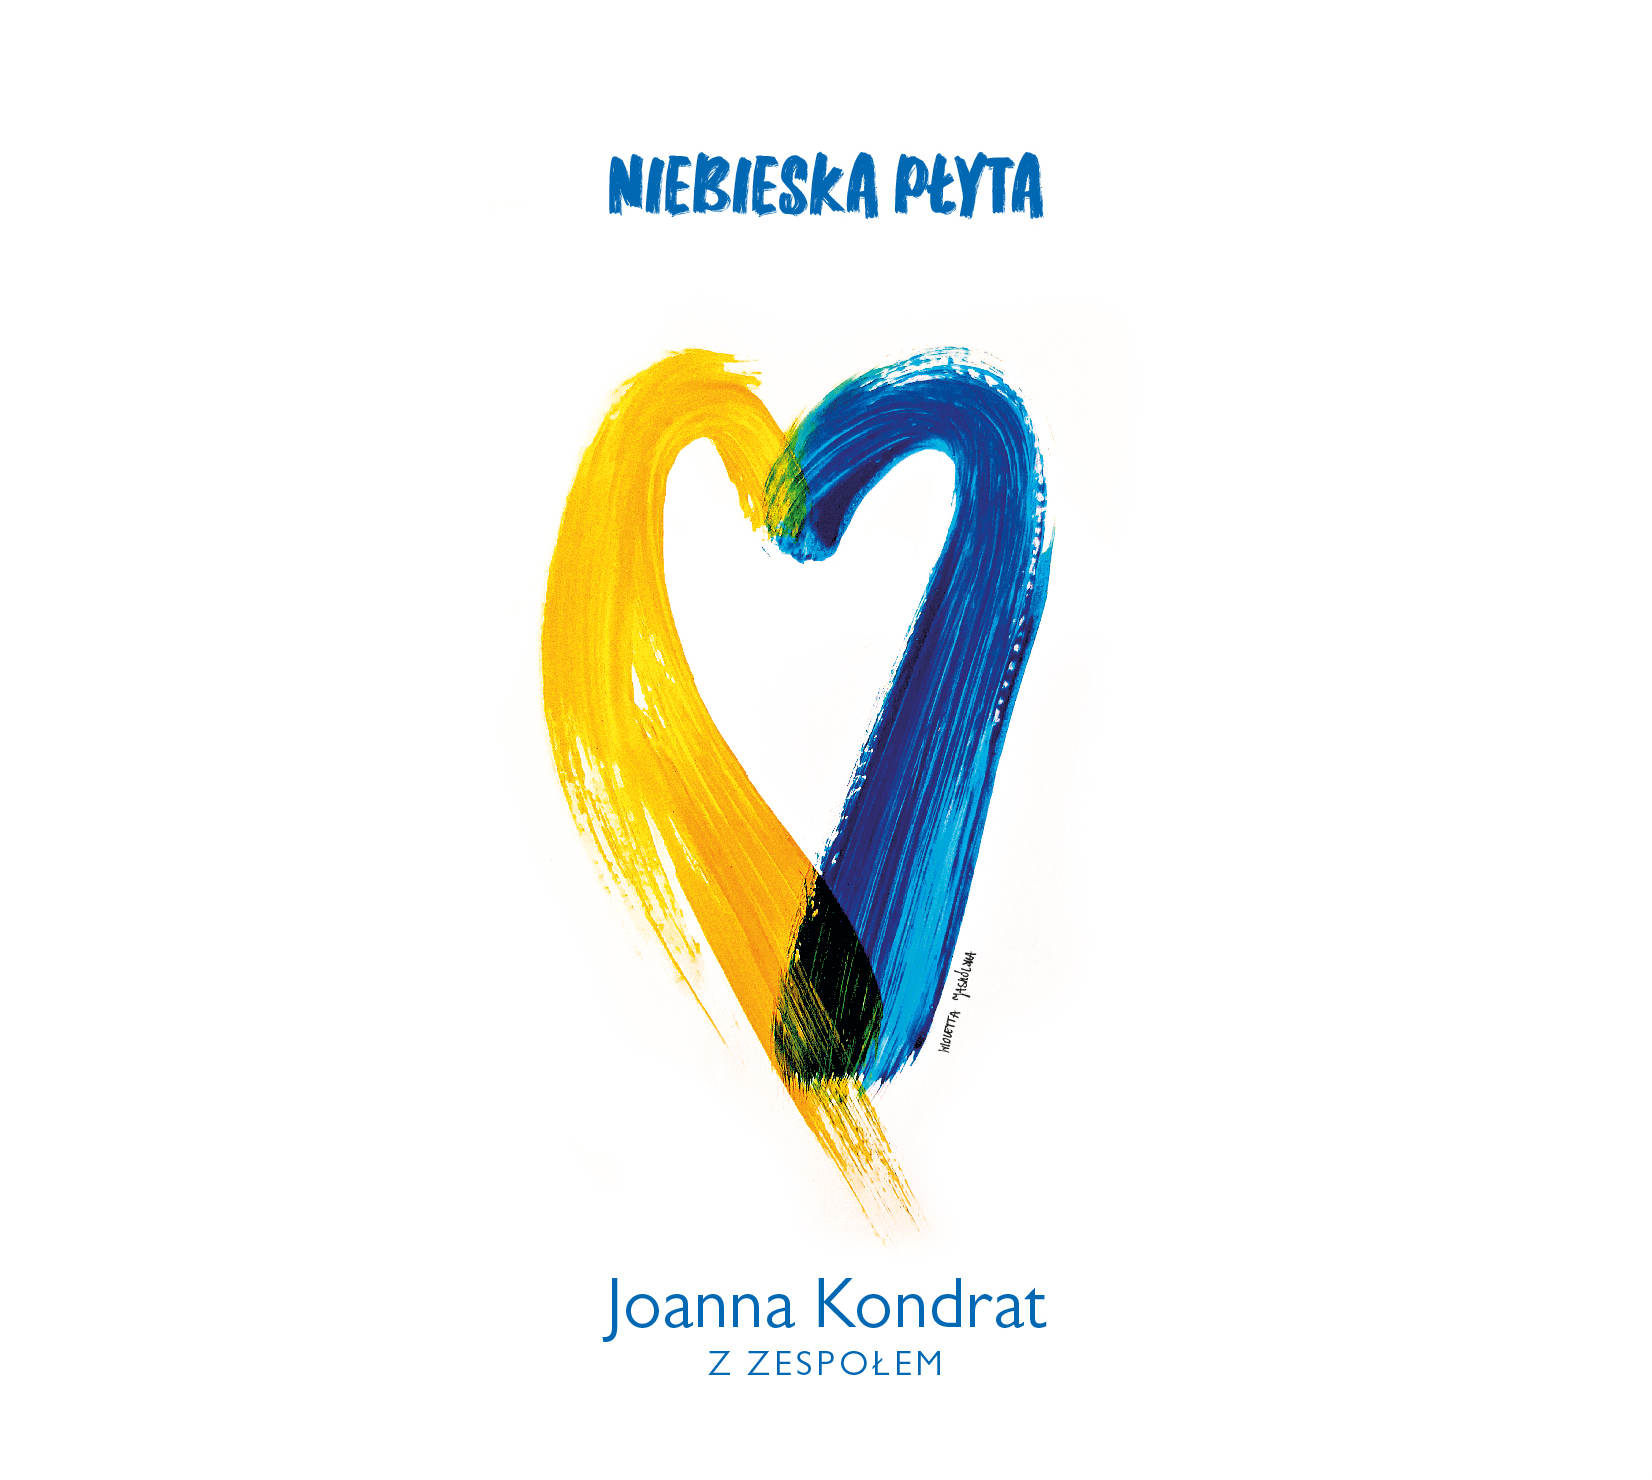 Joanna Kondrat z zespołem - [2022] Niebieska Płyta
(Joanna Kondrat)